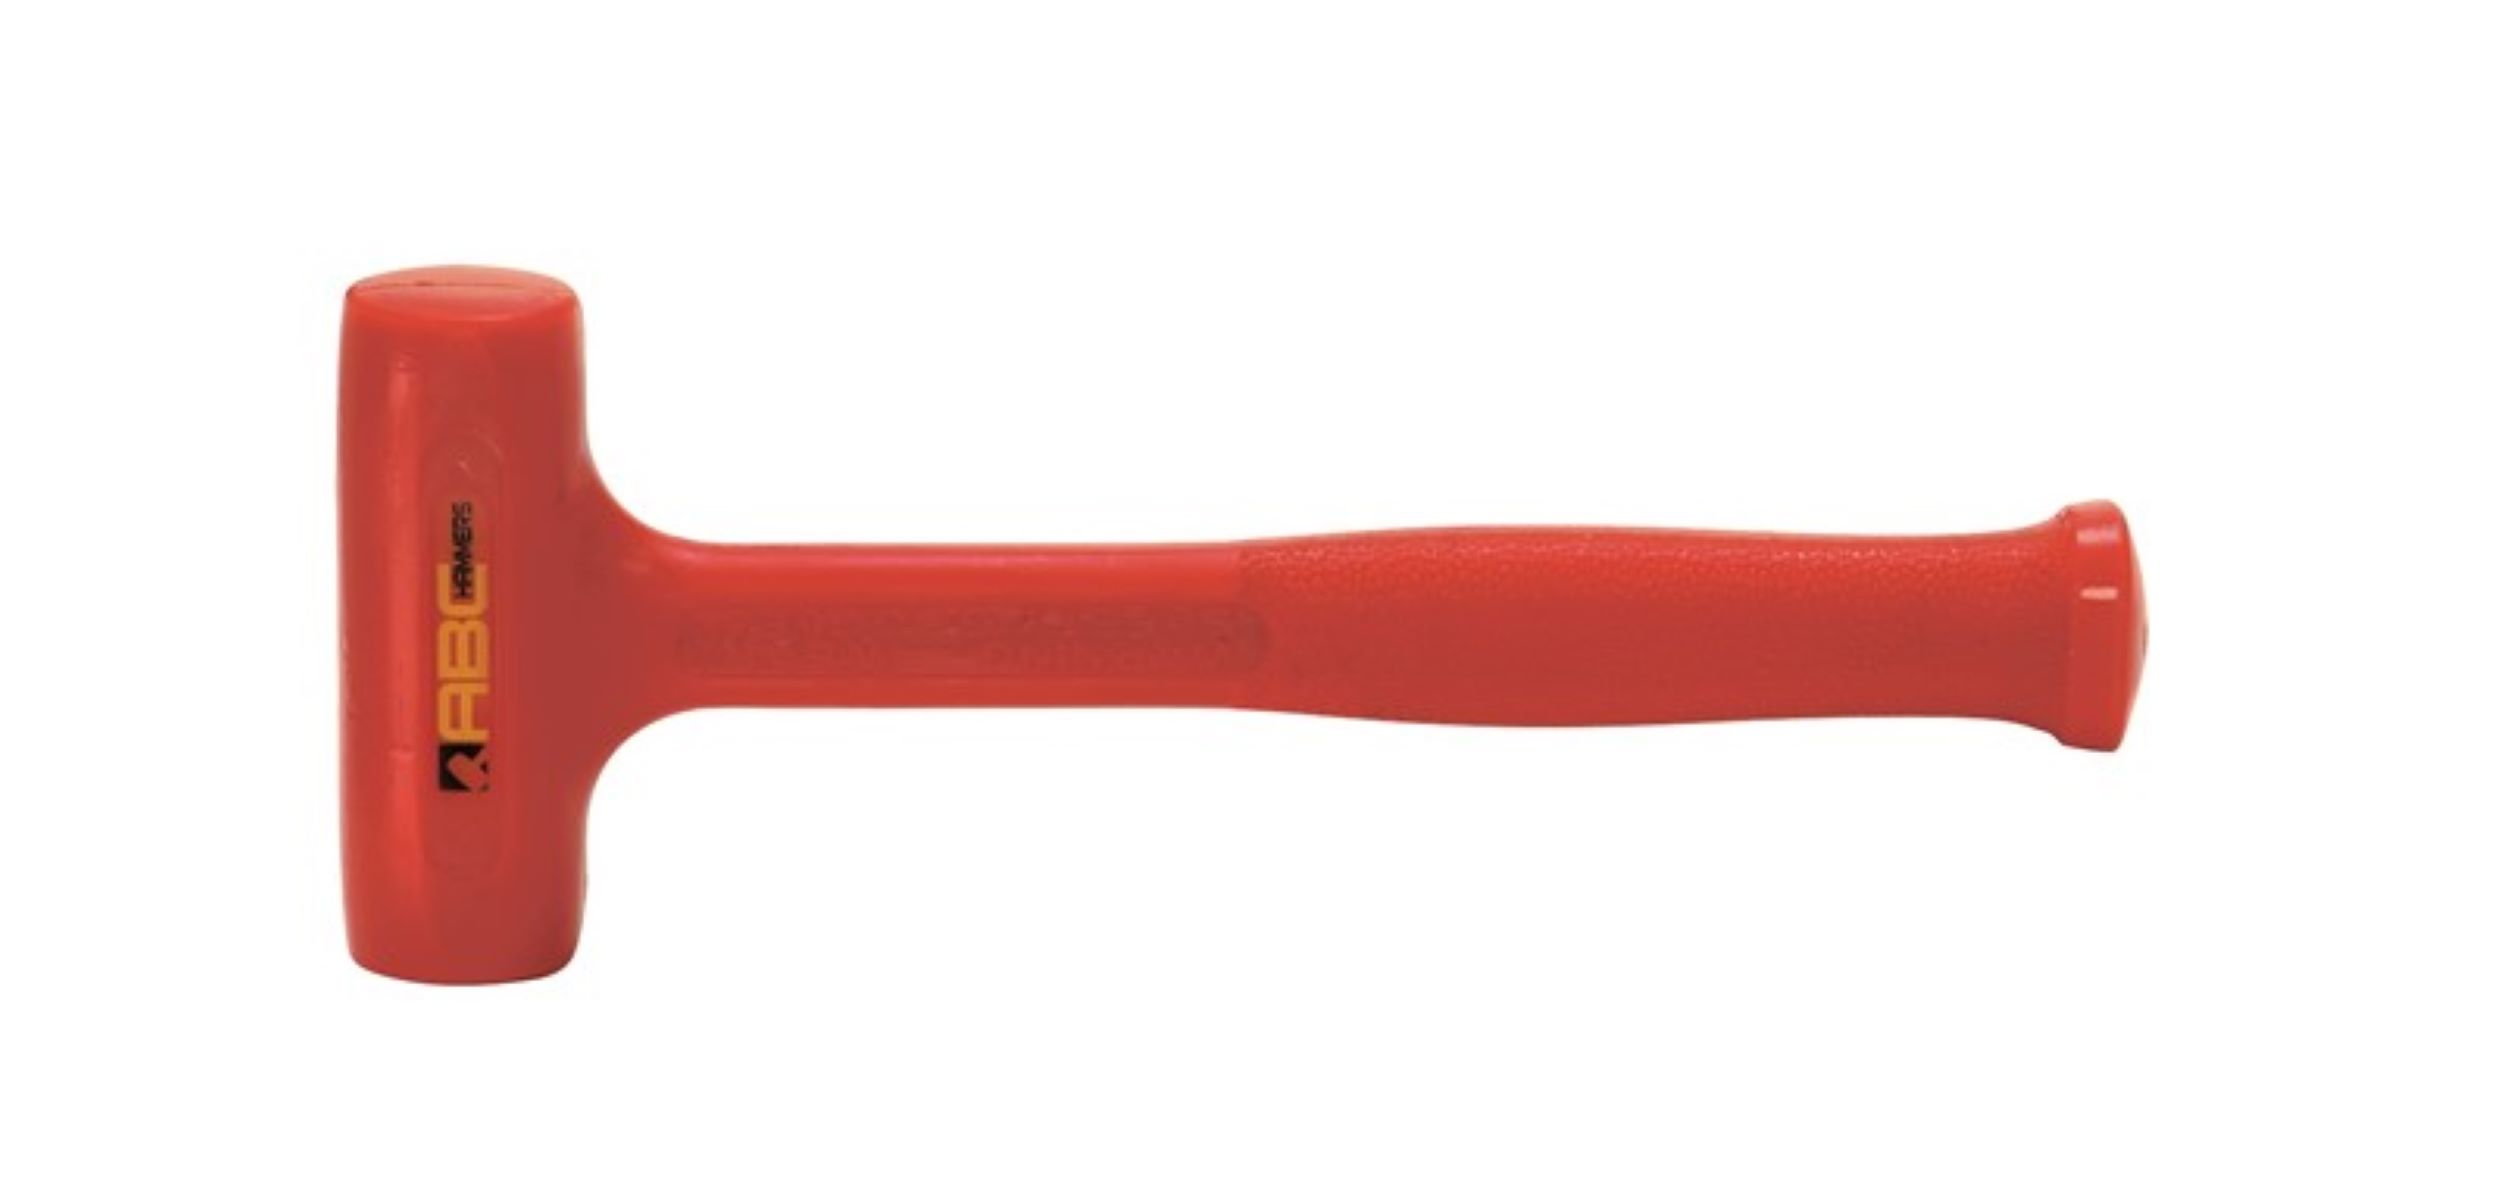 18 oz. Polyurethane Dead Blow Hammer - Overall Length 10.50"